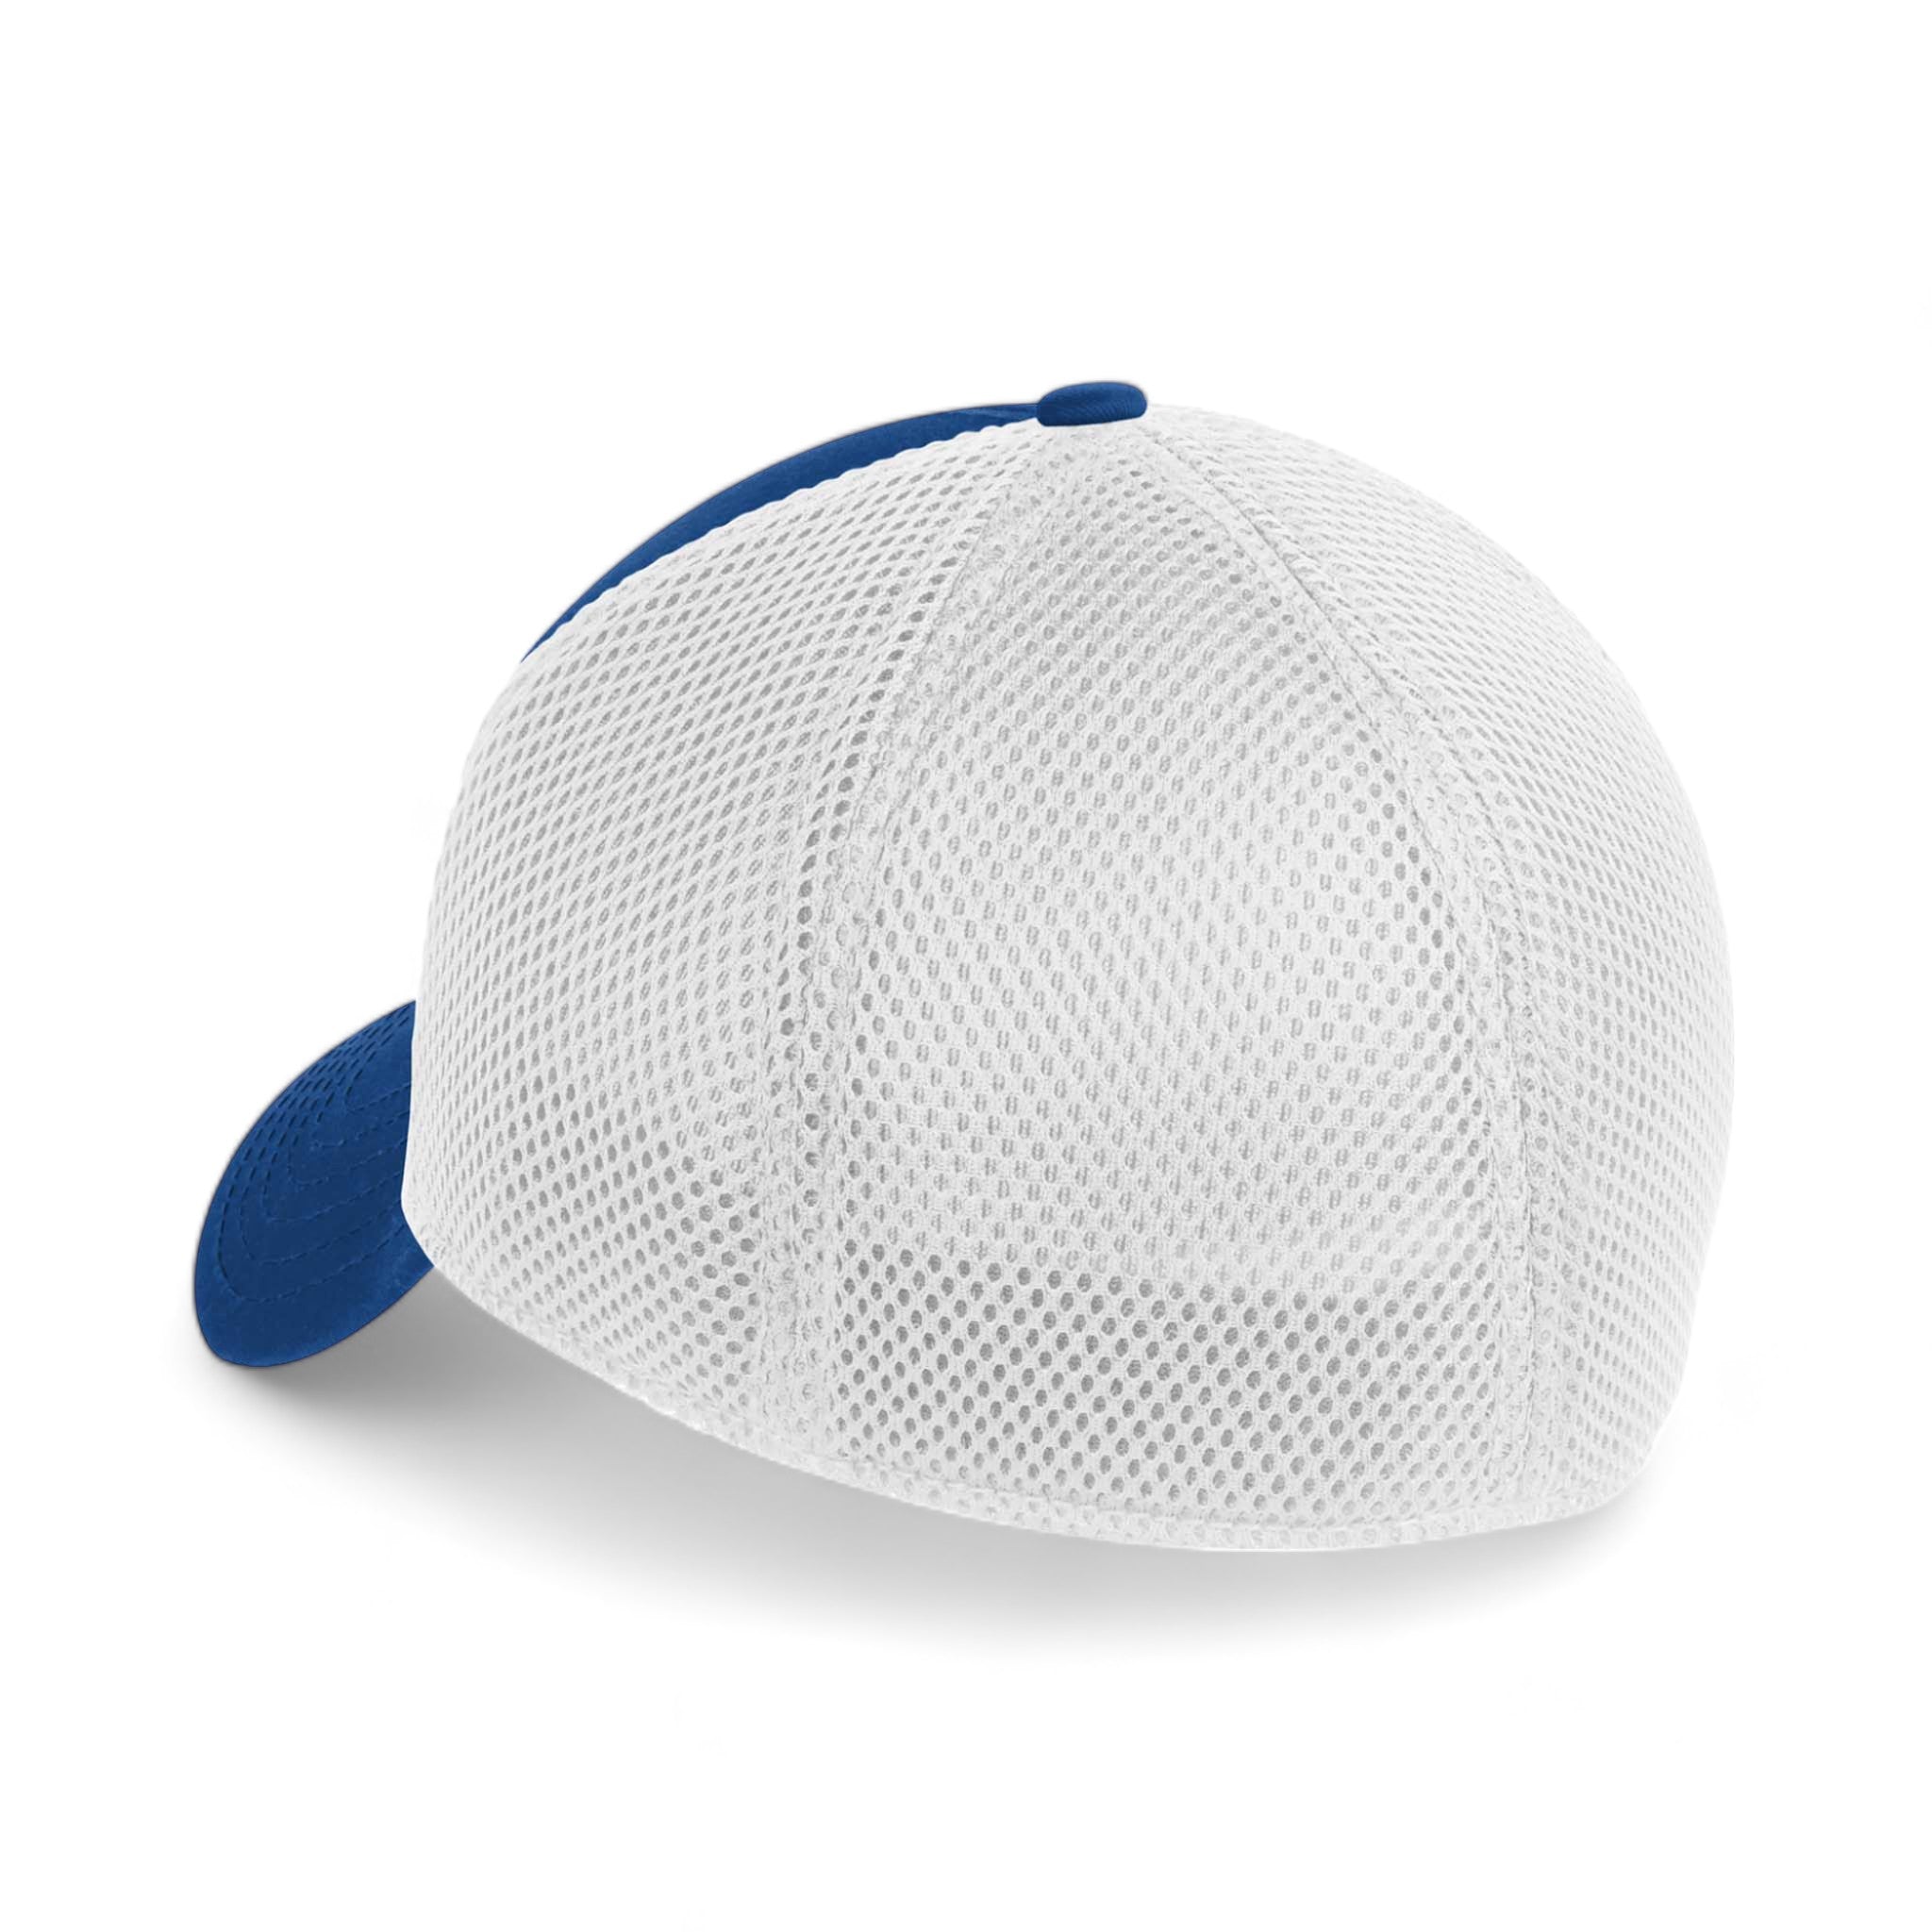 Back view of New Era NE1020 custom hat in royal and white